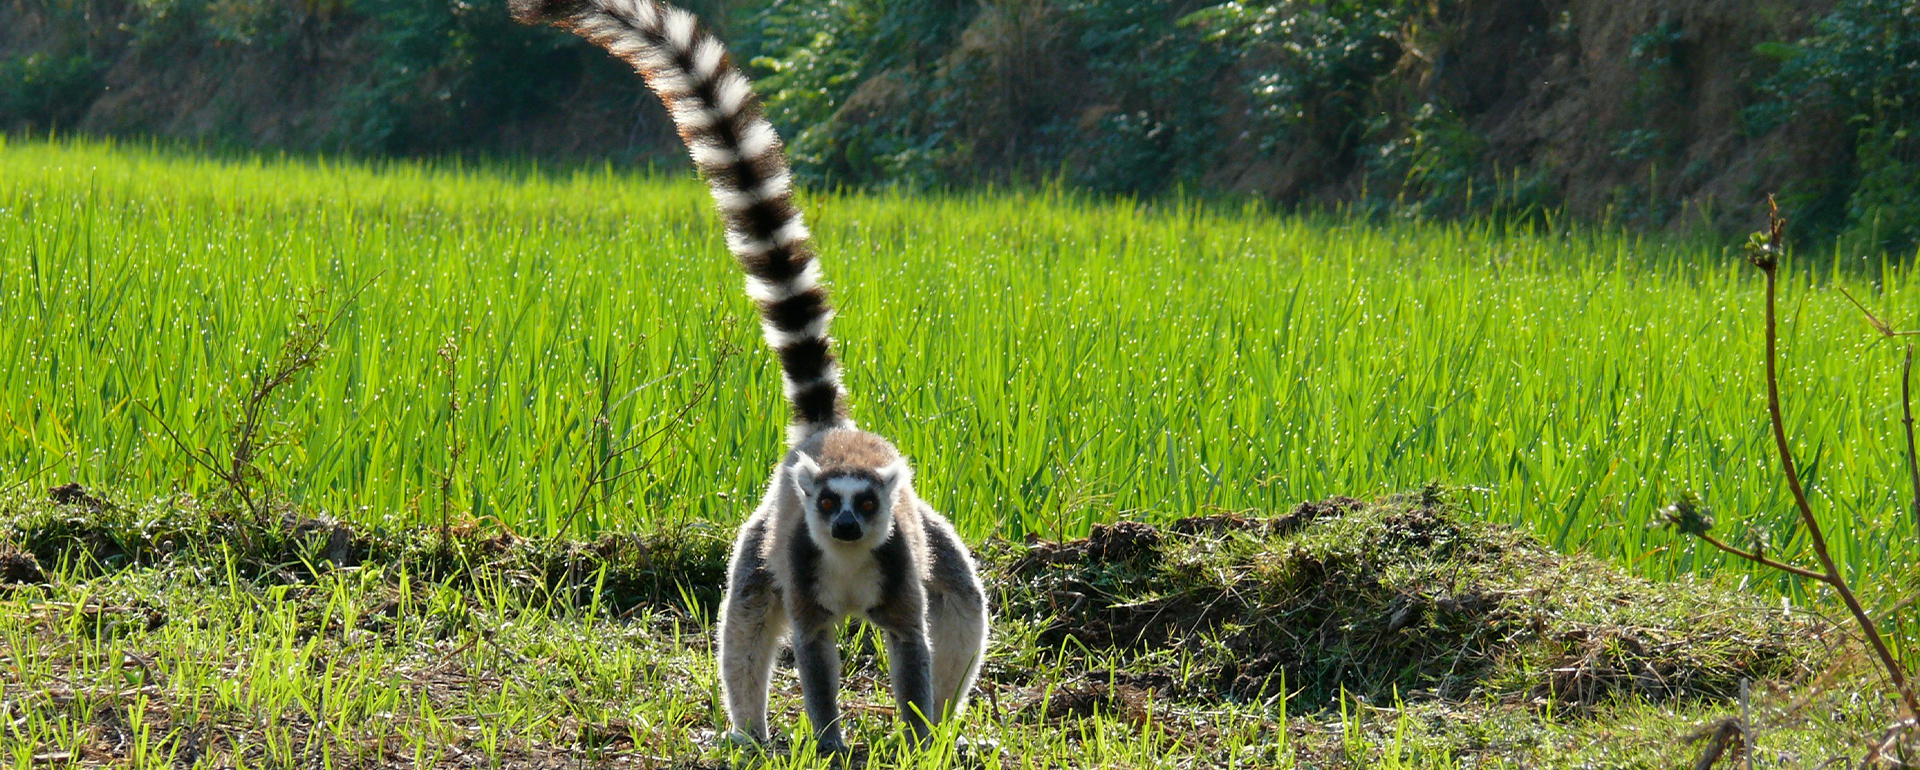 Bikereise in Madagaskar - Lemuren